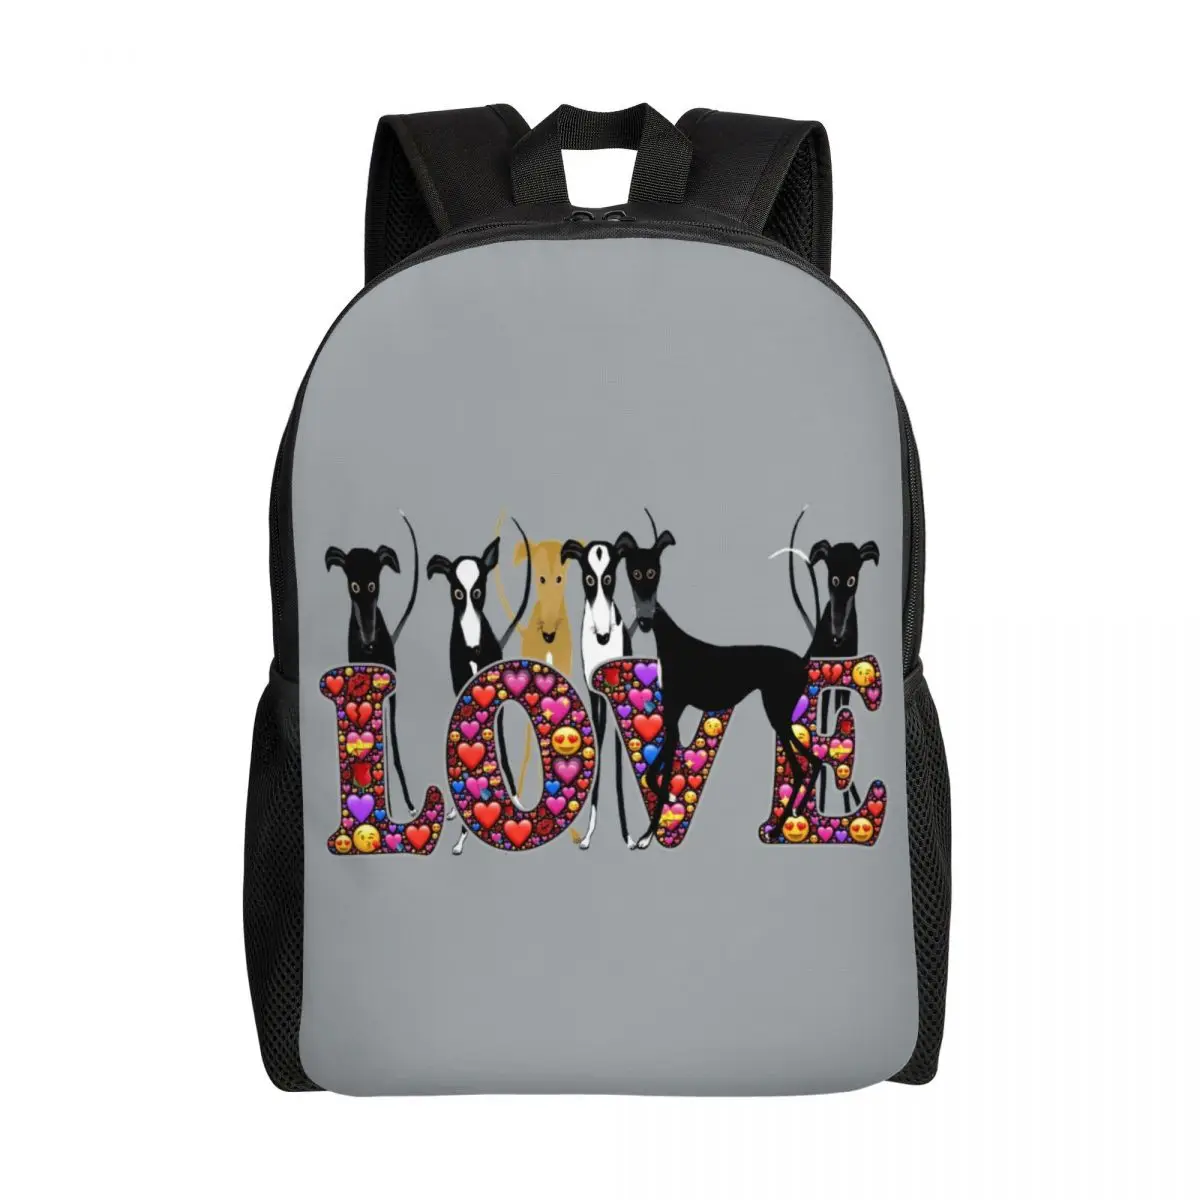 

Love Hounds Travel Backpack Women Men School Laptop Bookbag Greyhound Whippet Sighthound Dog College Student Daypack Bags